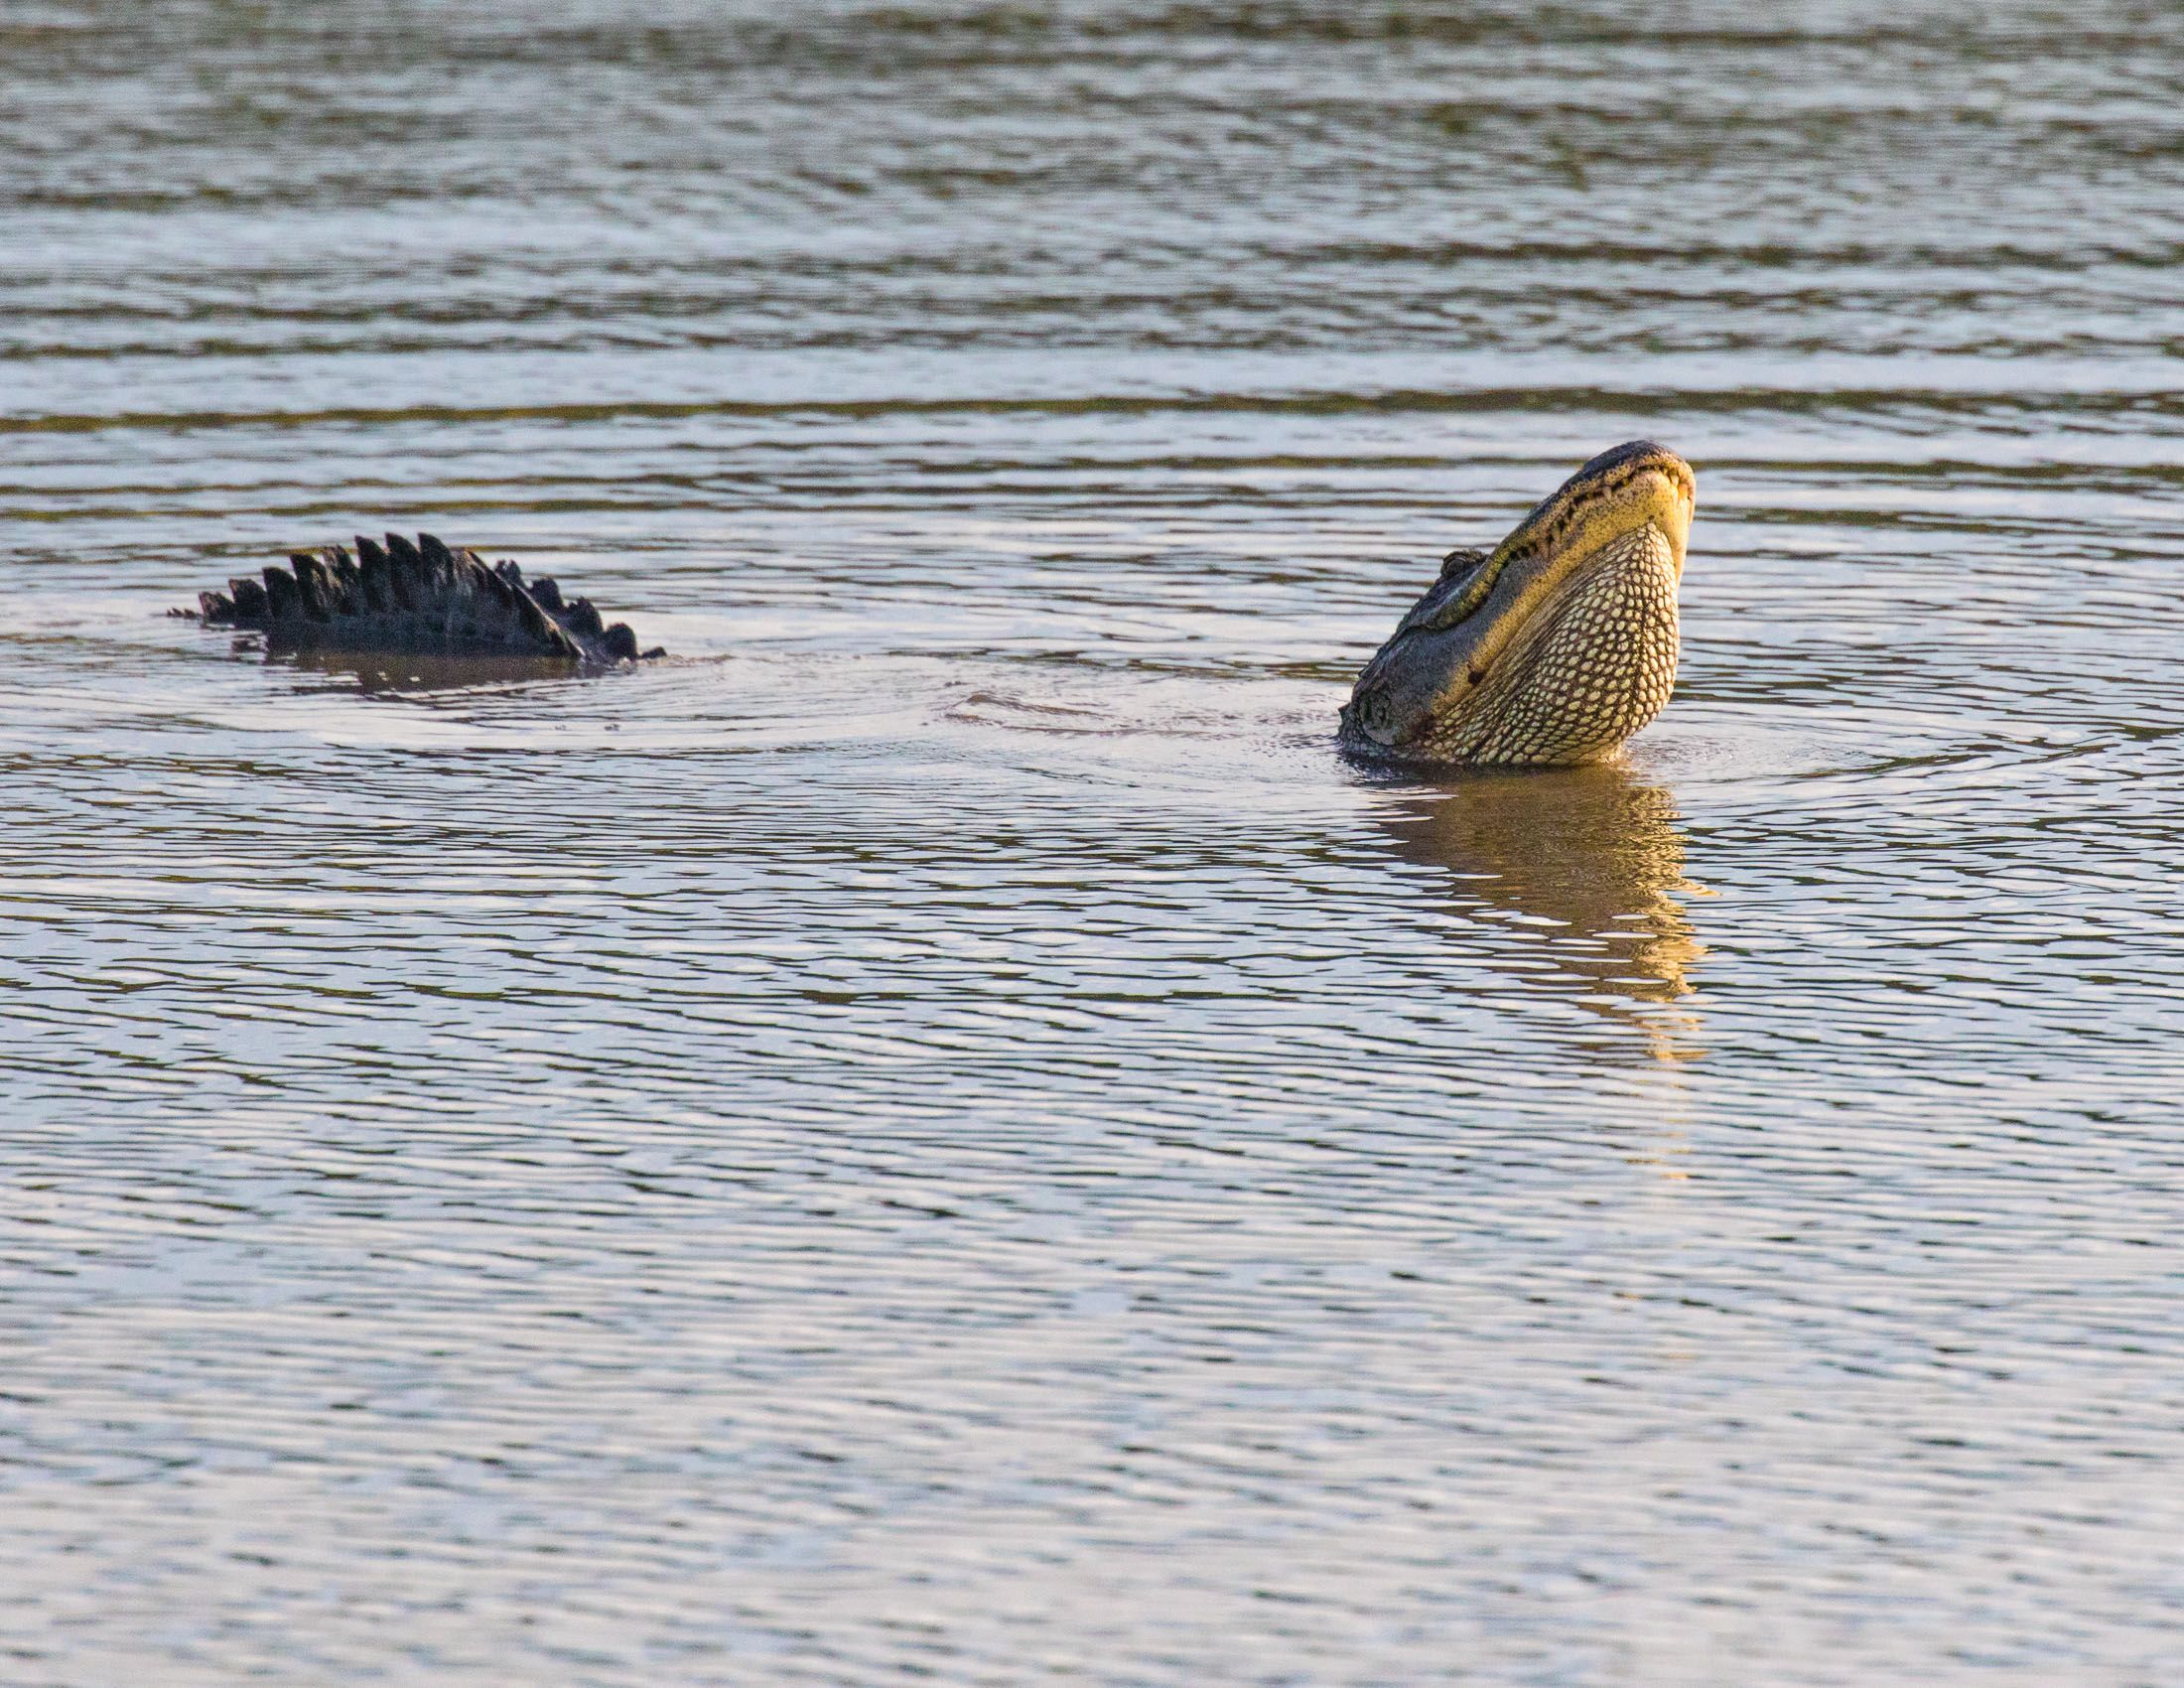 Alligators of Ace Basin, South Carolina-14.jpg